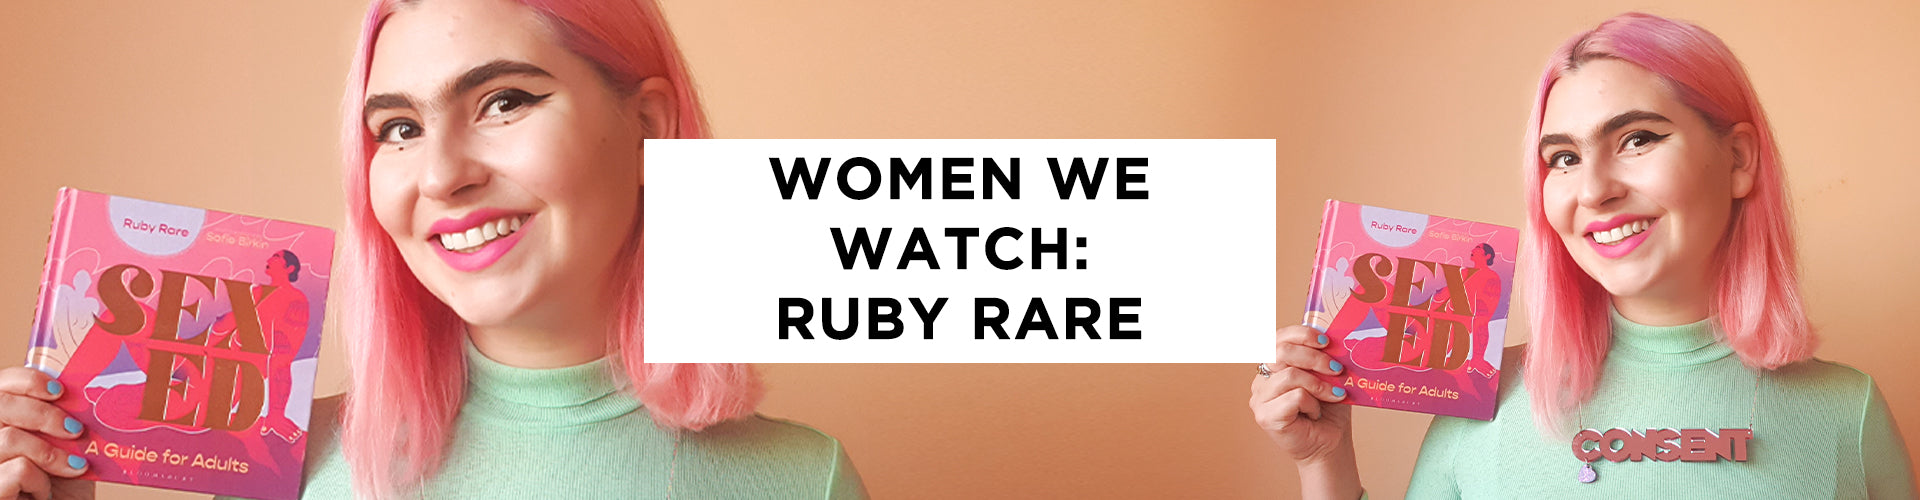 Women We Watch Ruby Rare